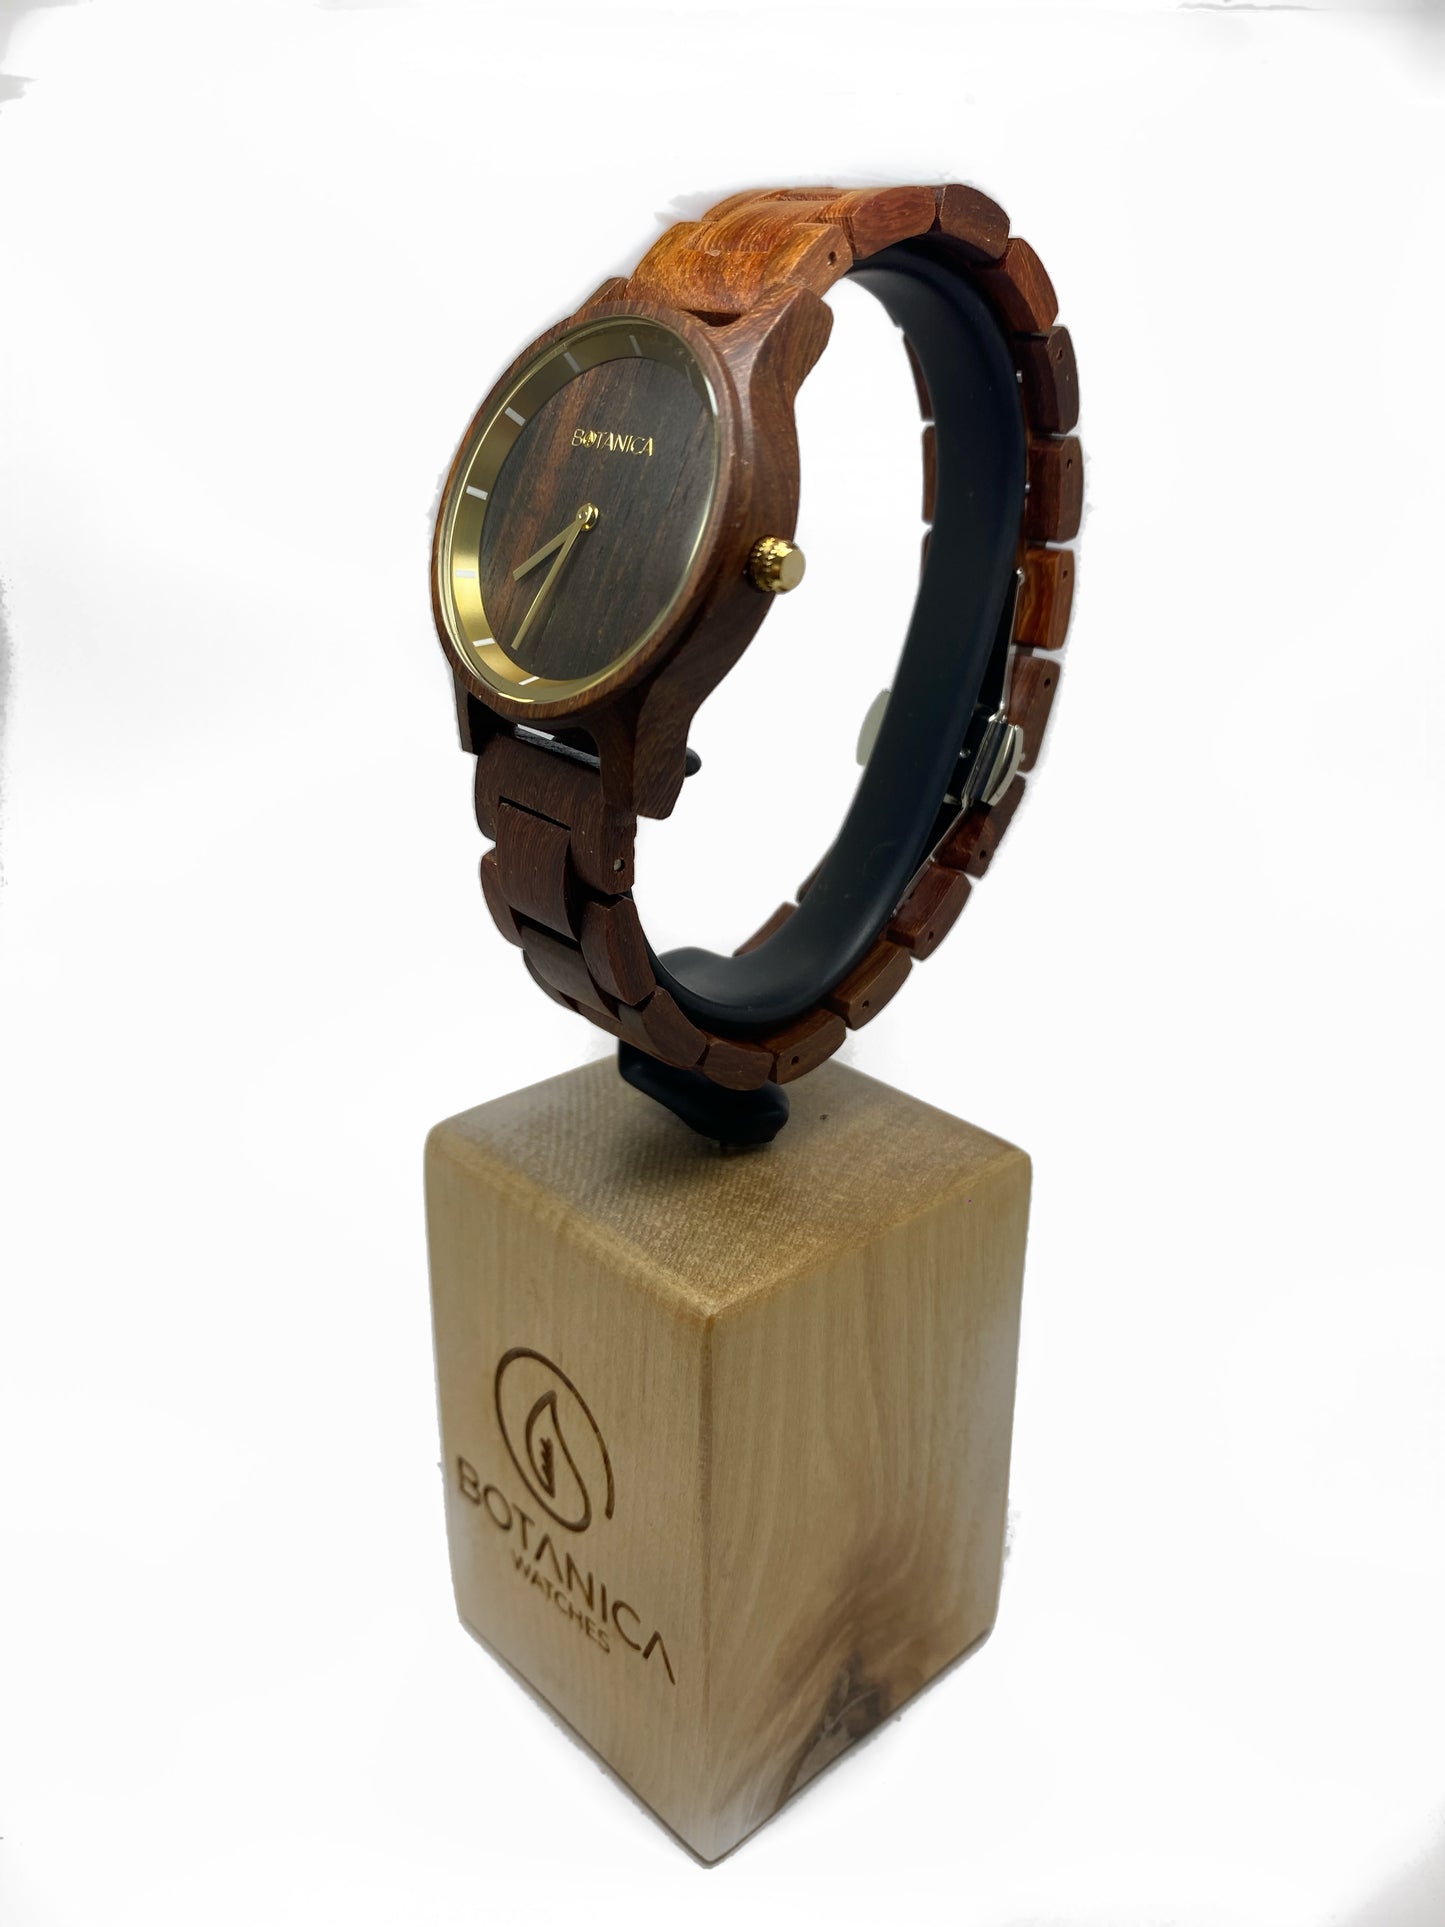 Men’s Botanica vegan wooden watch with gold detailing